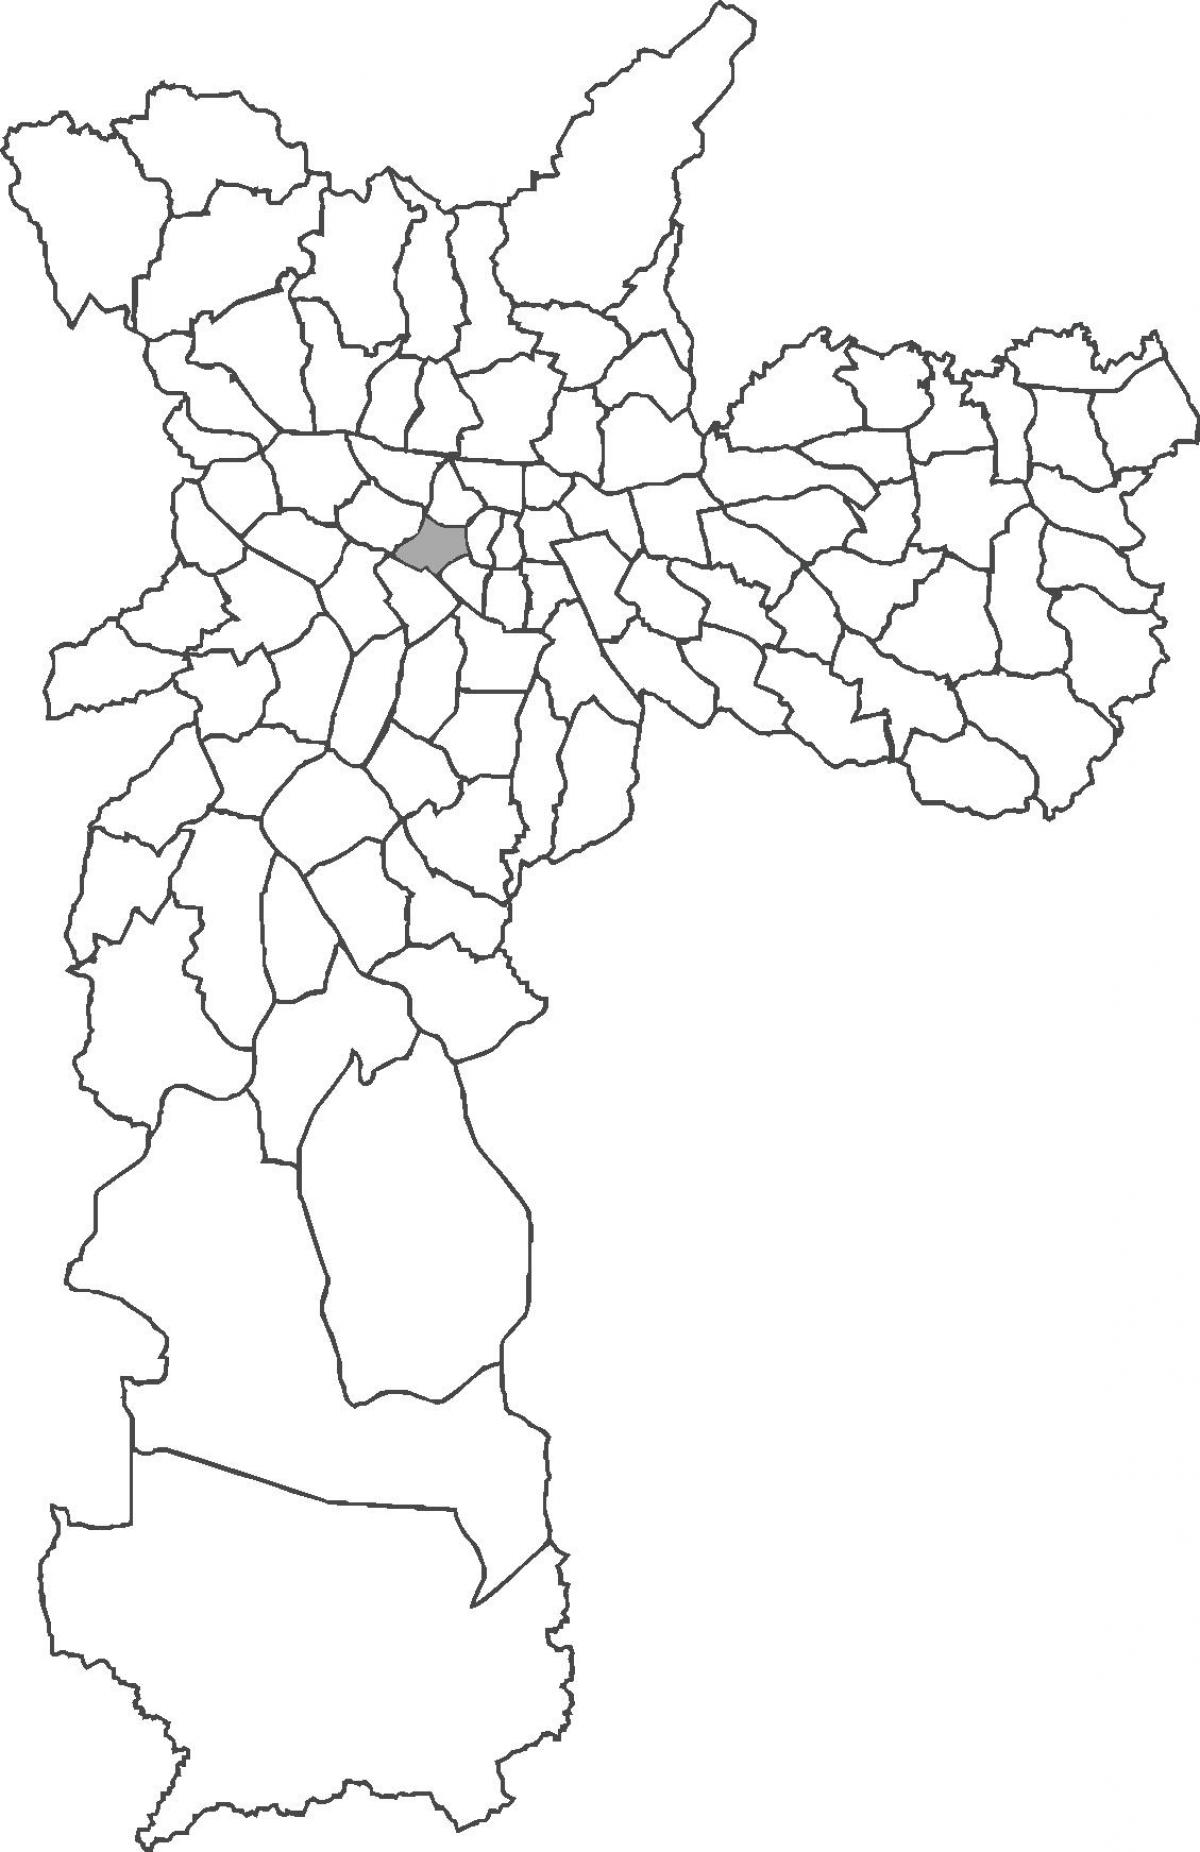 نقشہ کے Consolação ضلع